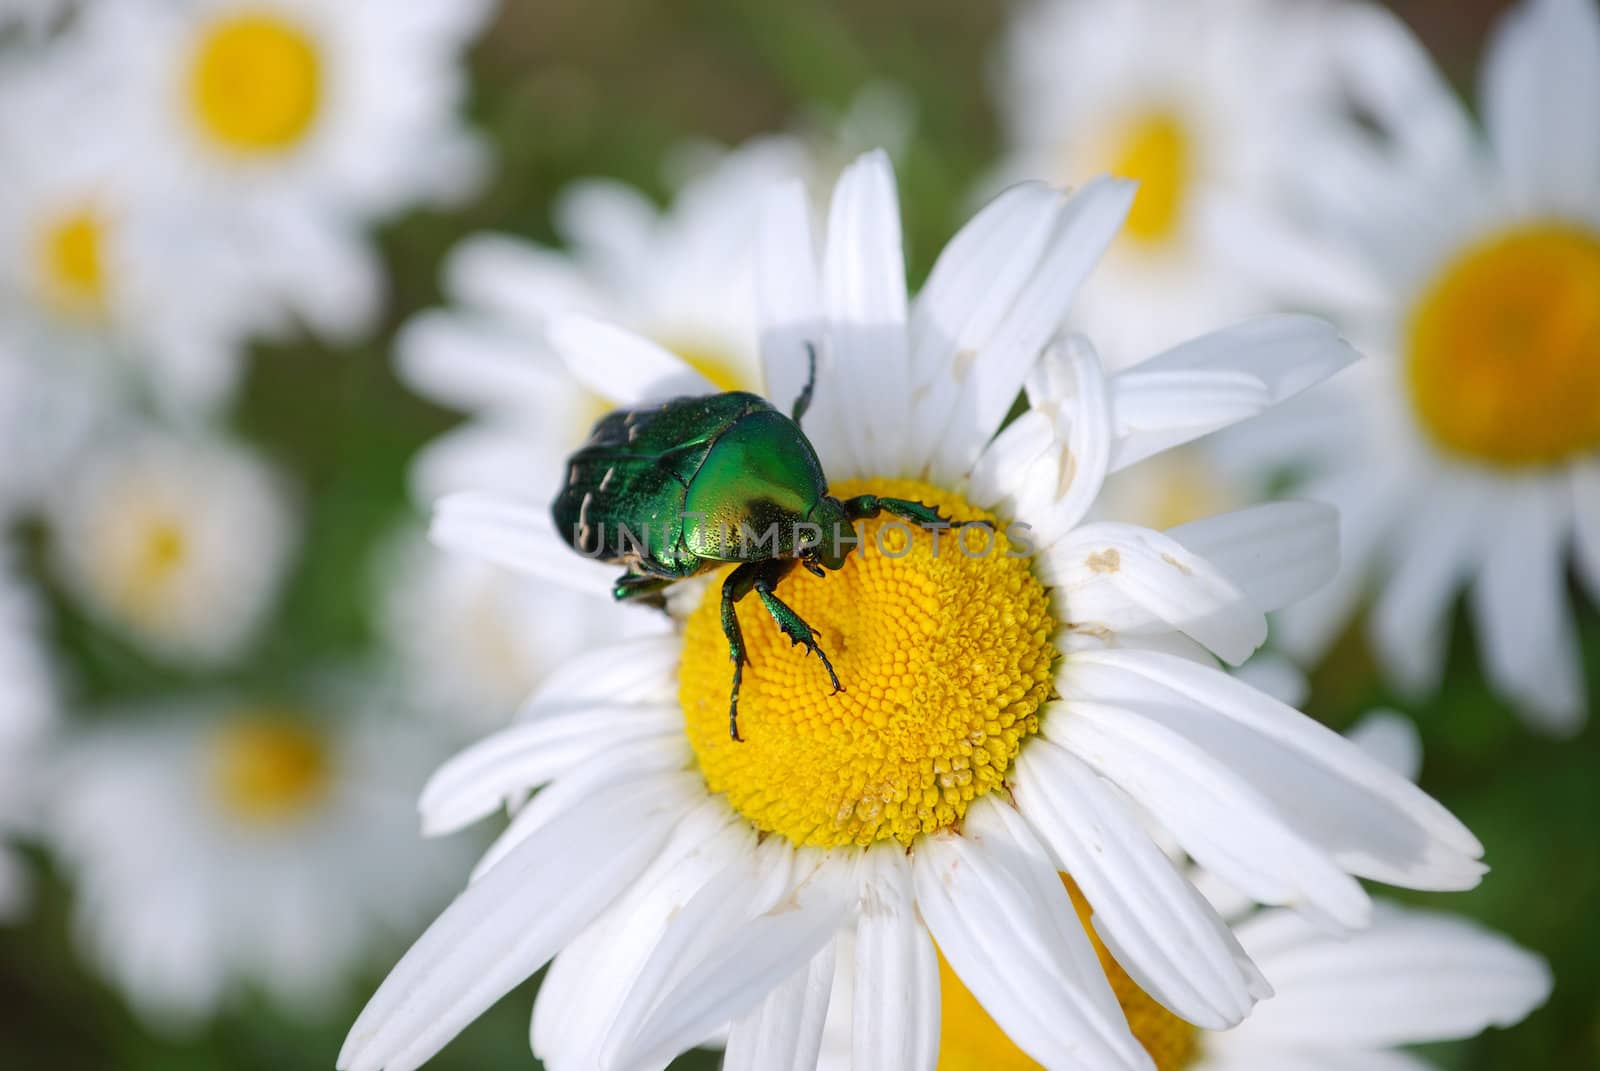 Green bug on a daisy by svetico